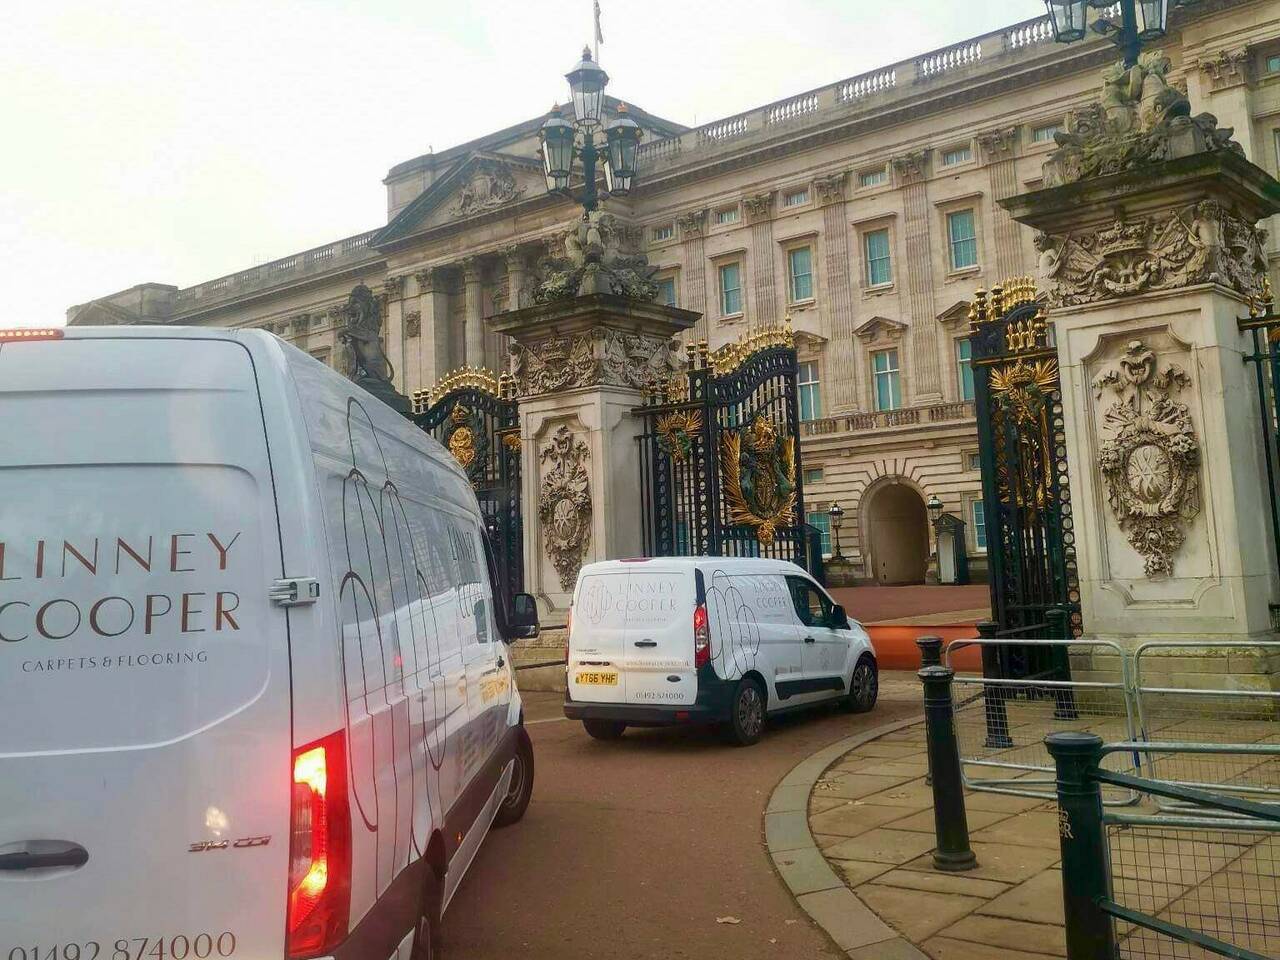 Buckingham Palace Flooring - Linney Cooper